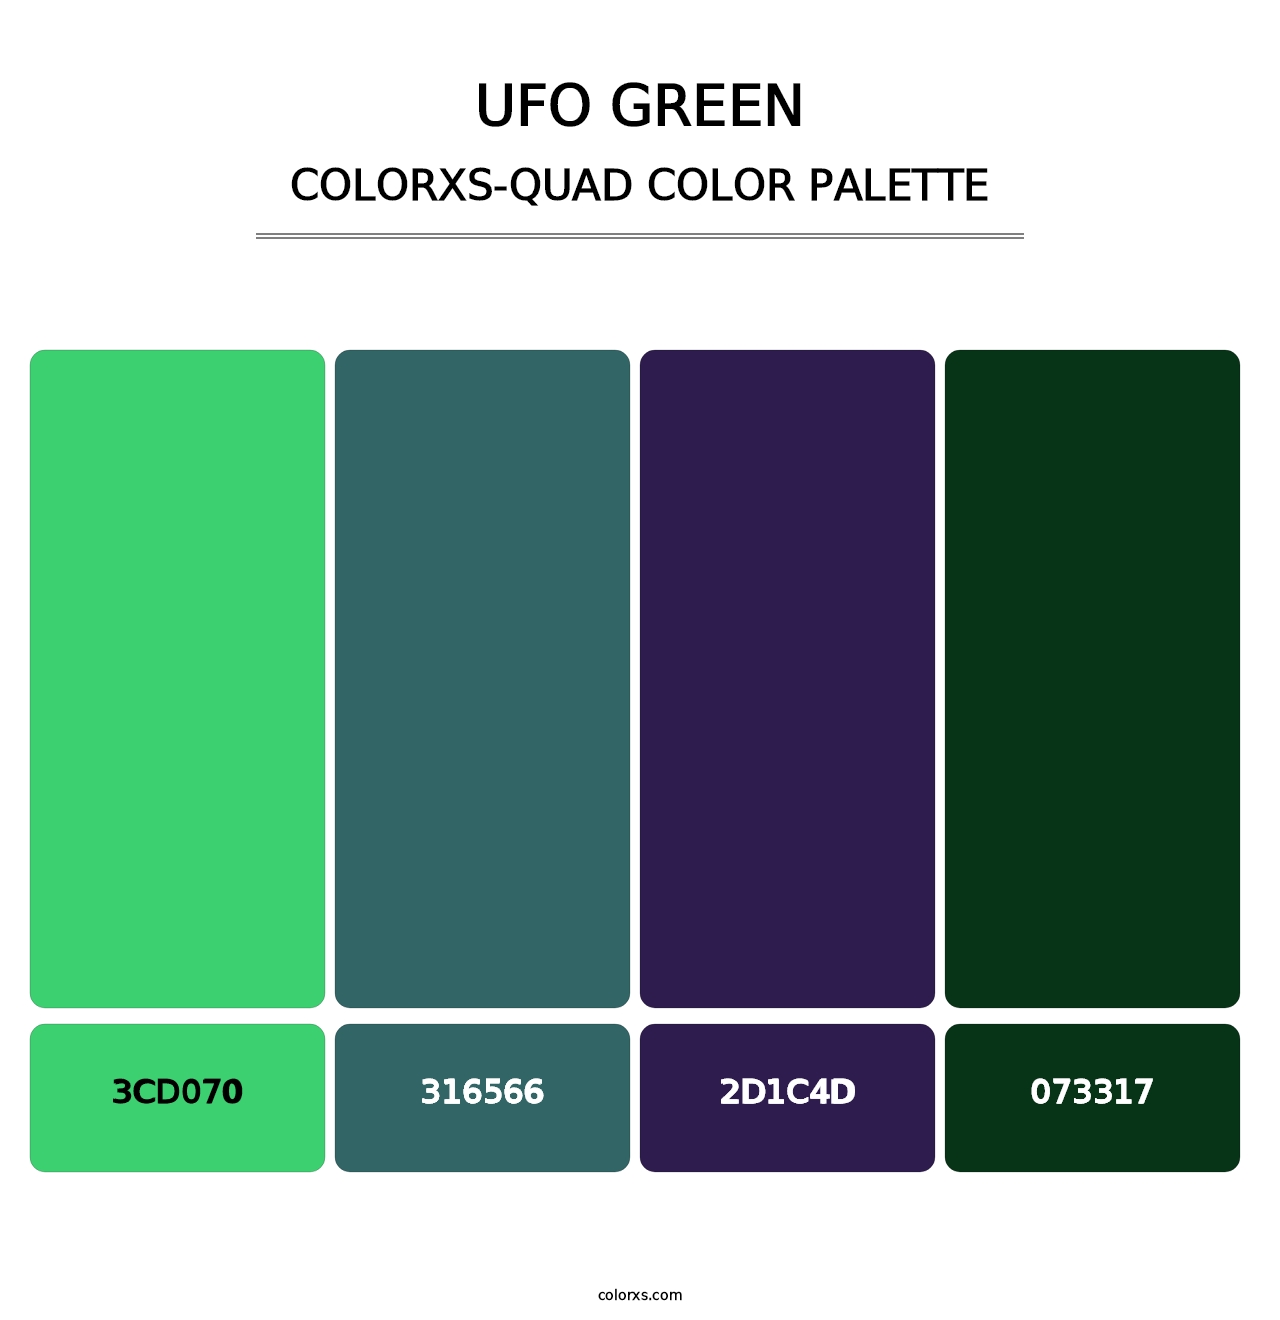 UFO Green - Colorxs Quad Palette